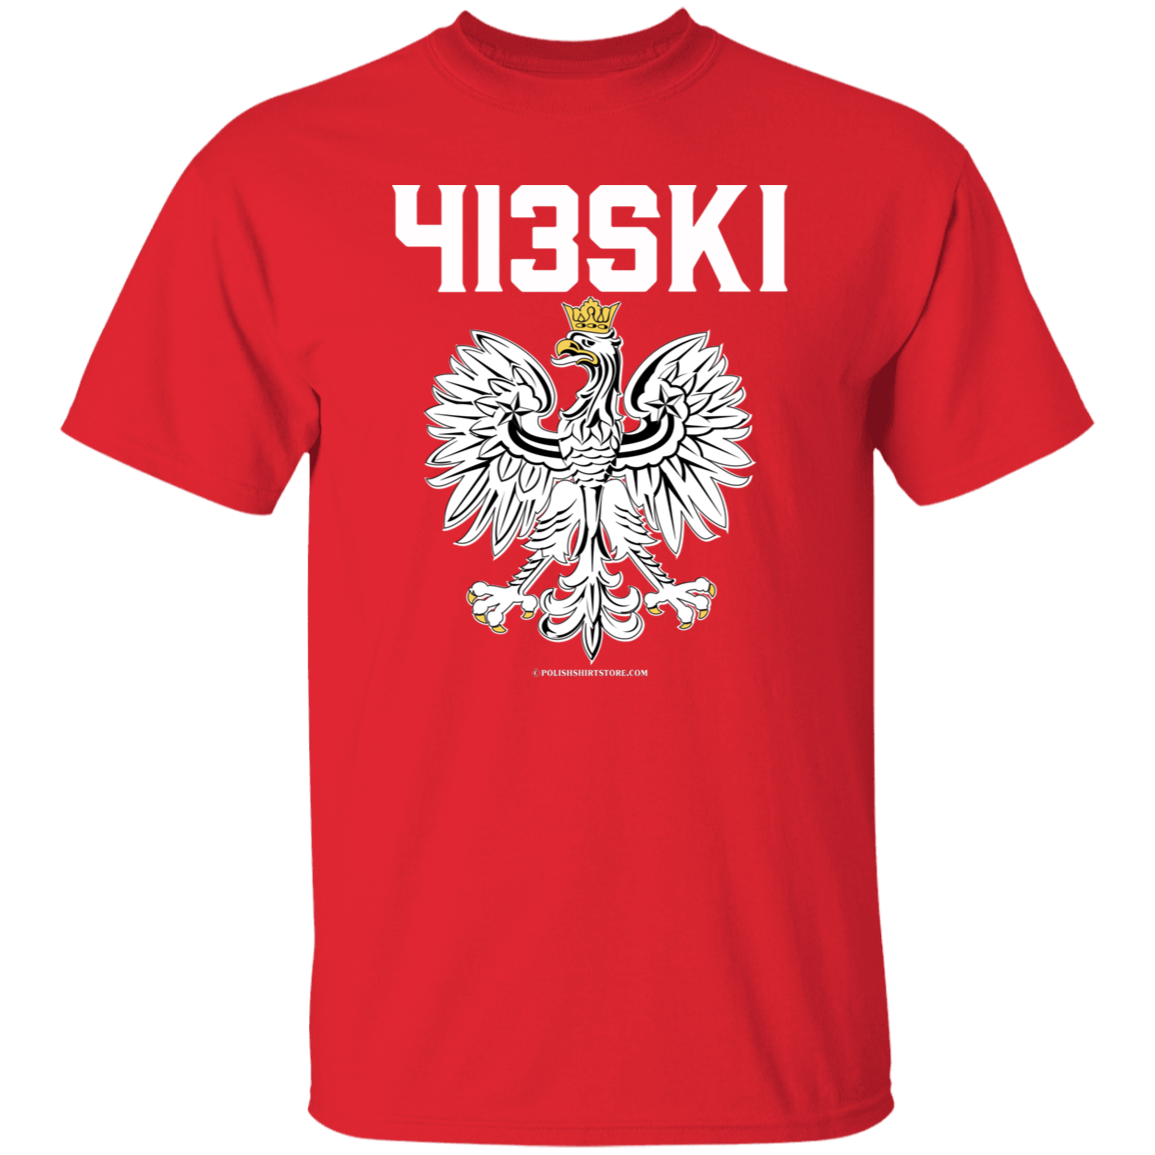 413SKI Apparel CustomCat G500 5.3 oz. T-Shirt Red S